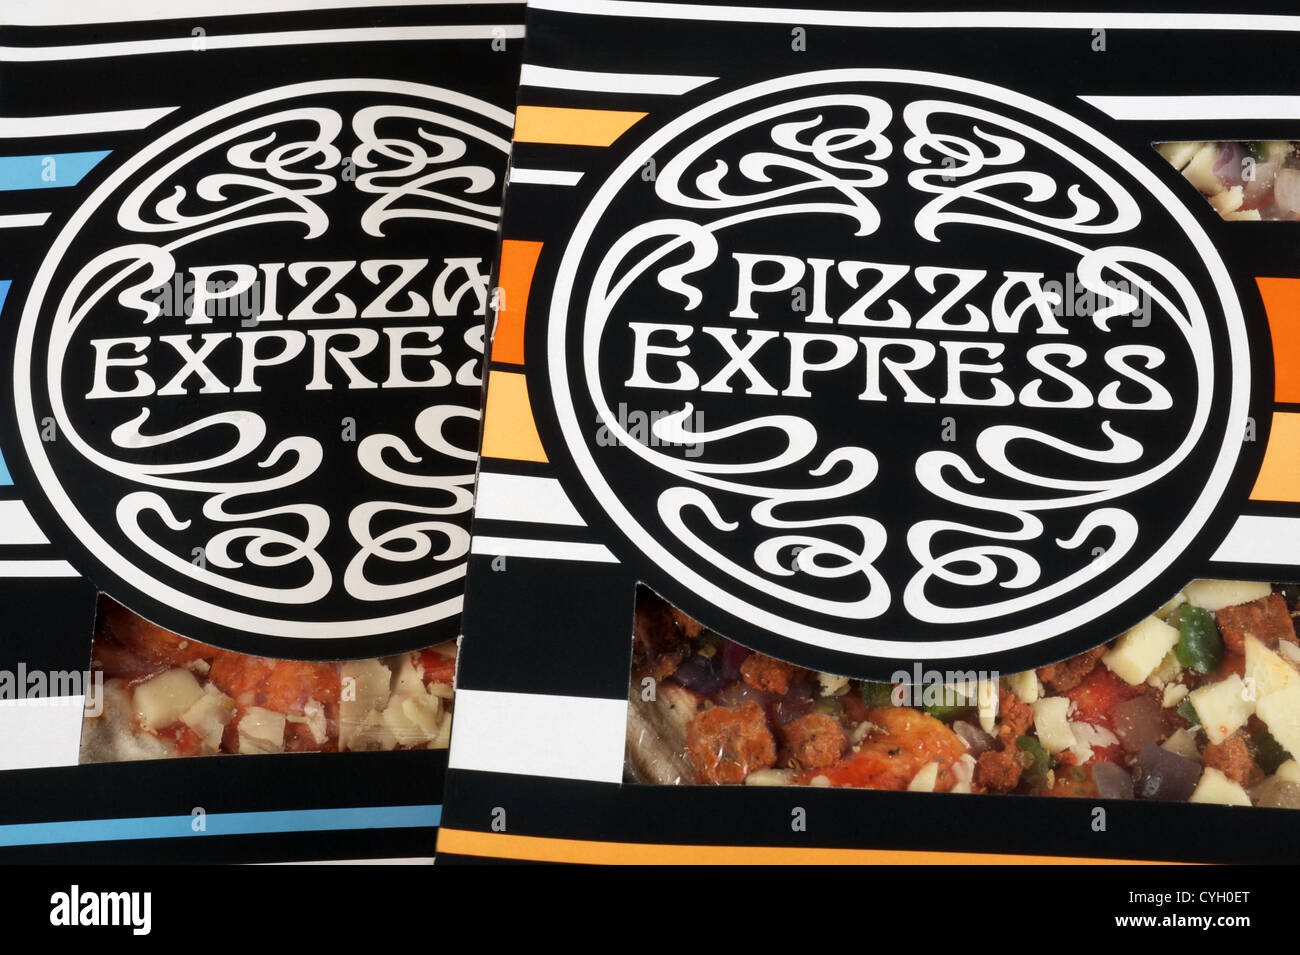 Pizza Express pizzas Stock Photo